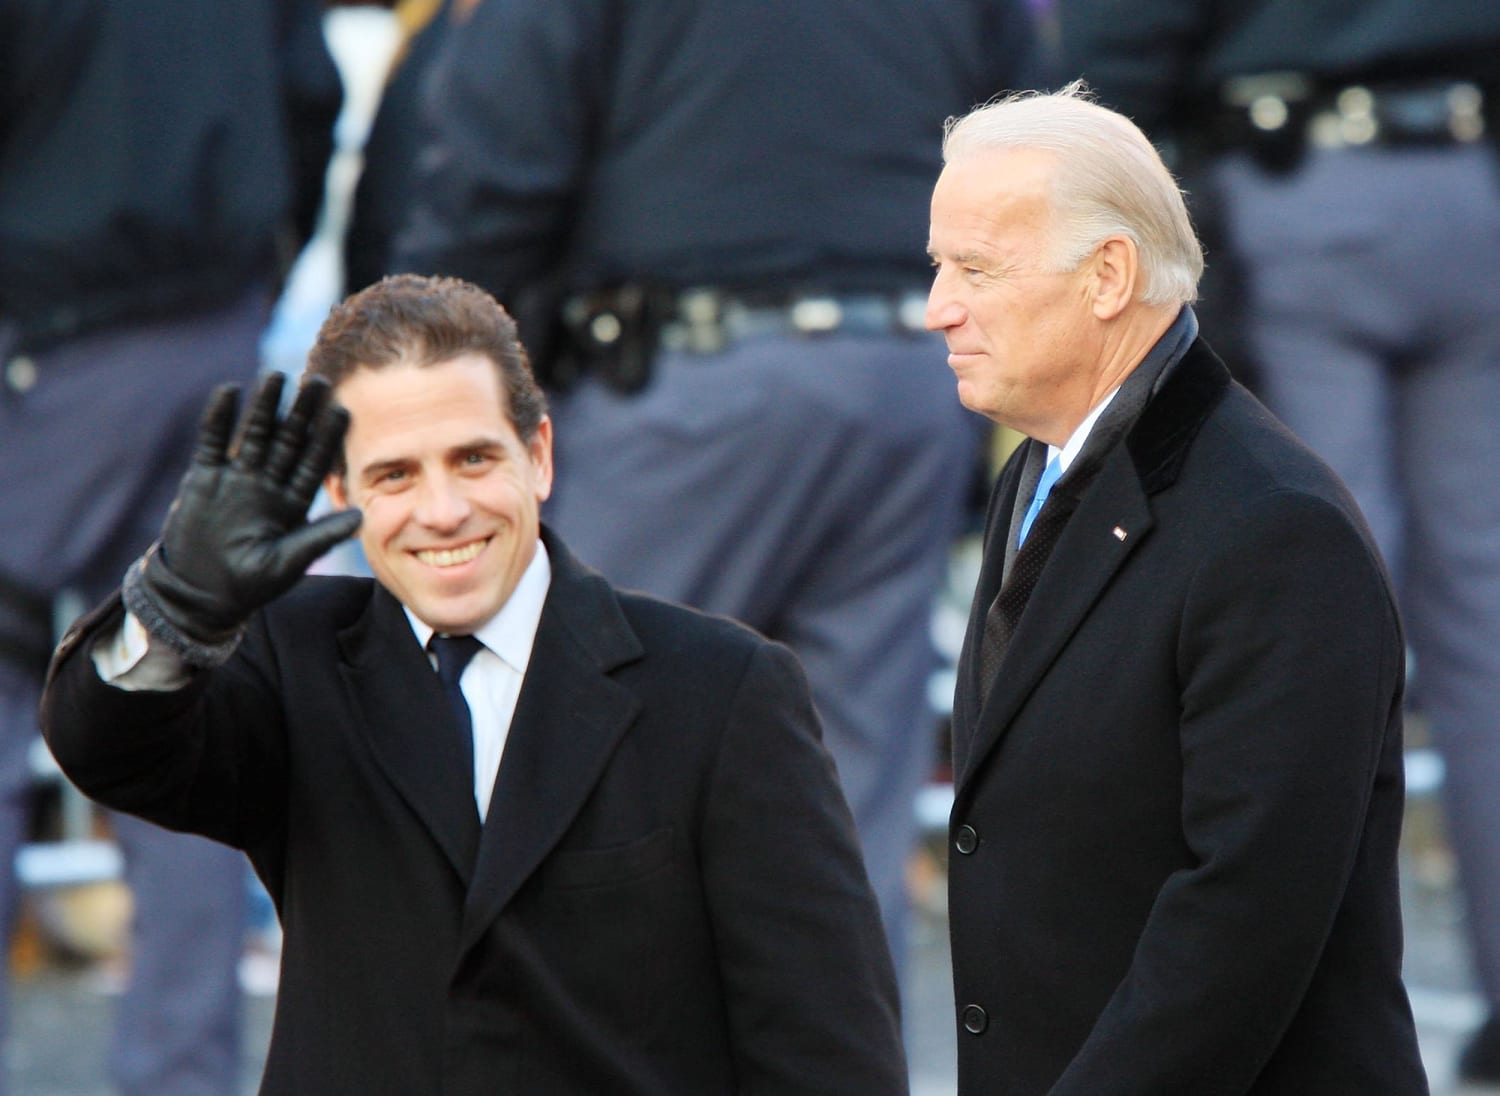 Joe Biden's Son Hunter Kicked Out of Navy for Cocaine - NBC News